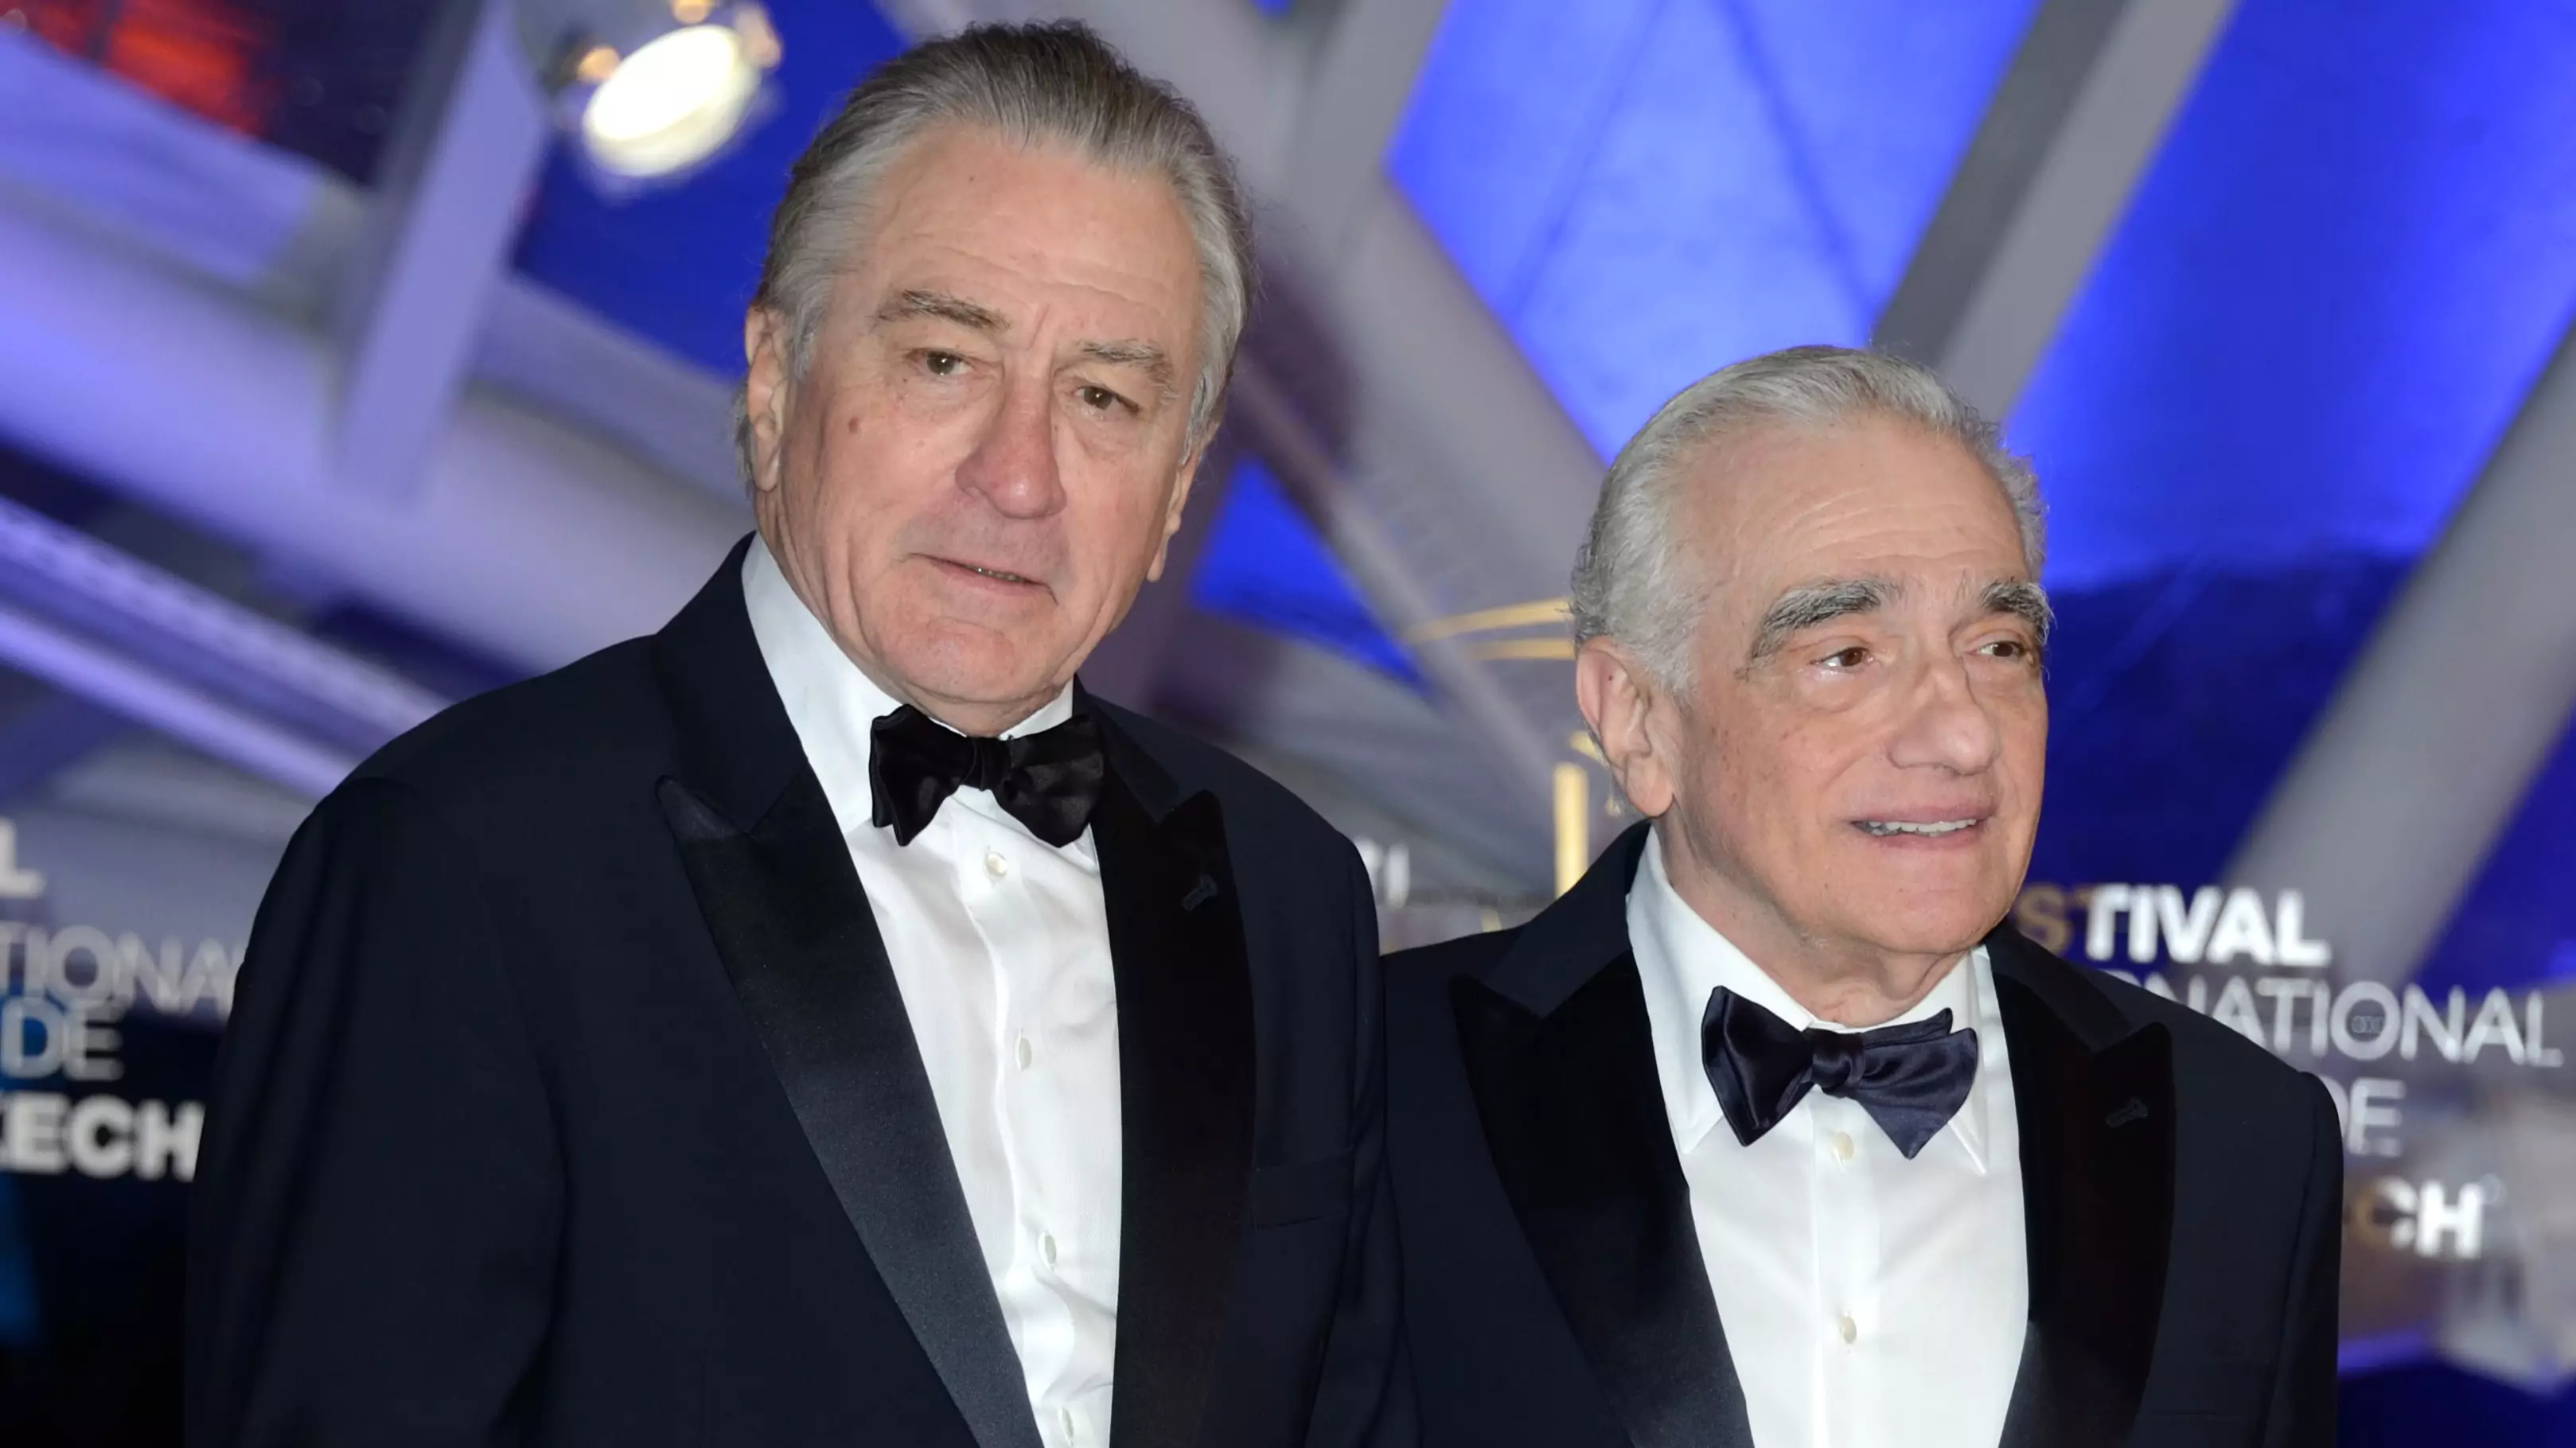 Martin Scorsese Serial Killer Film With Leonardo DiCaprio And Robert De Niro To Begin Filming